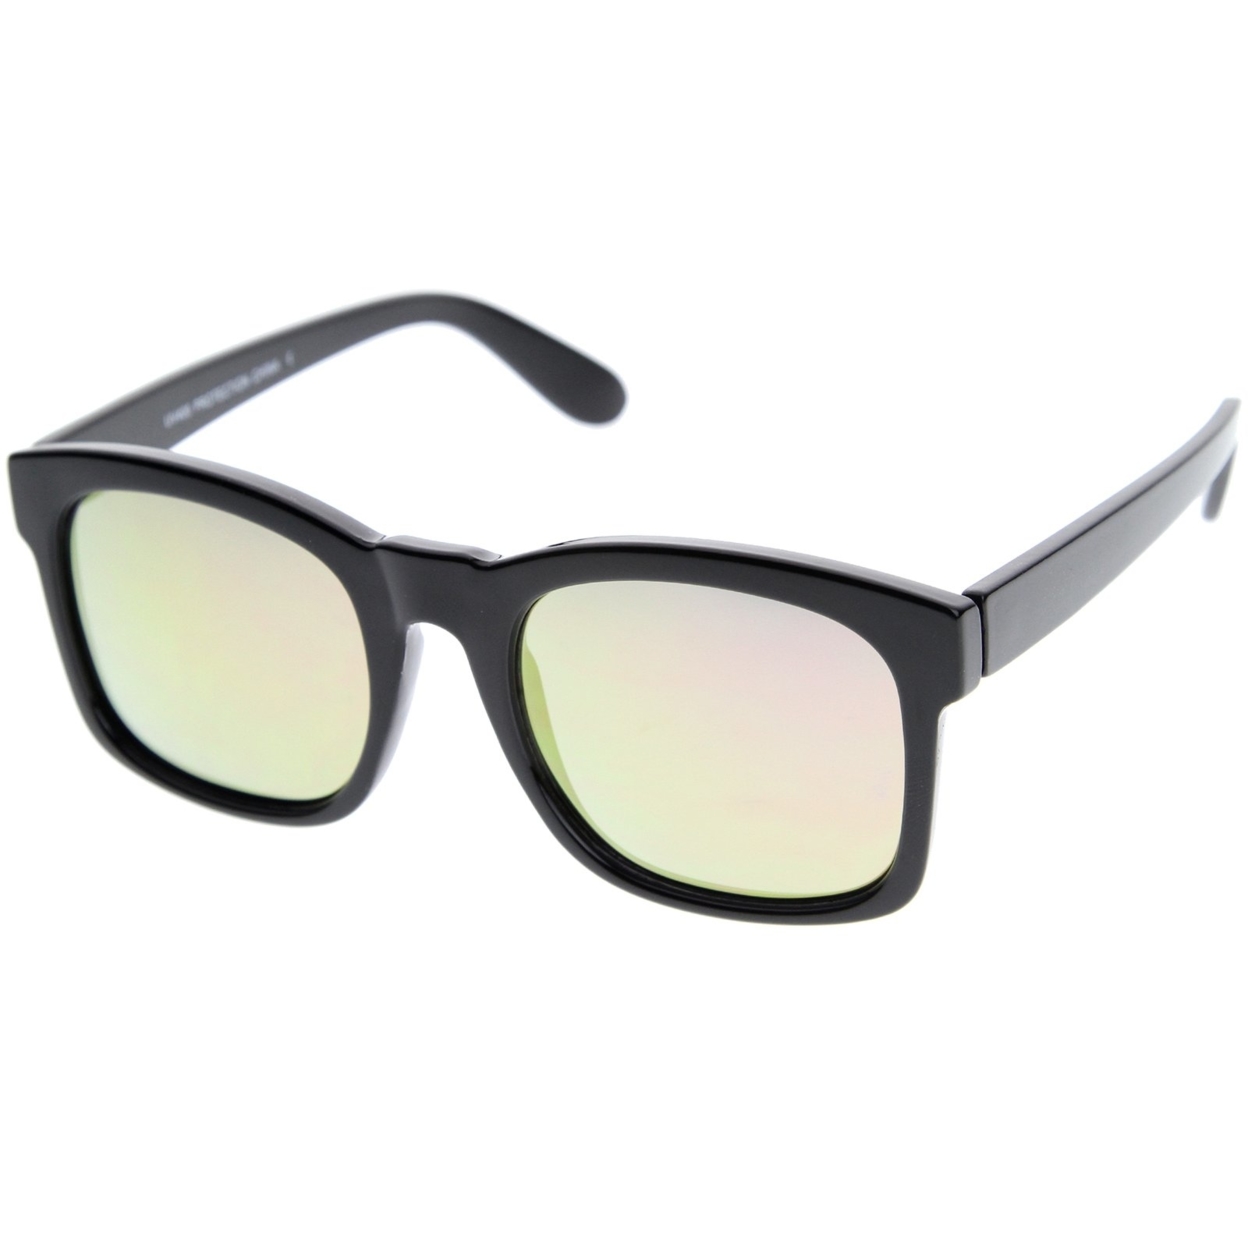 Mod Fashion Oversized Bold Frame Flash Mirror Horn Rimmed Sunglasses 61mm - Black / Ice